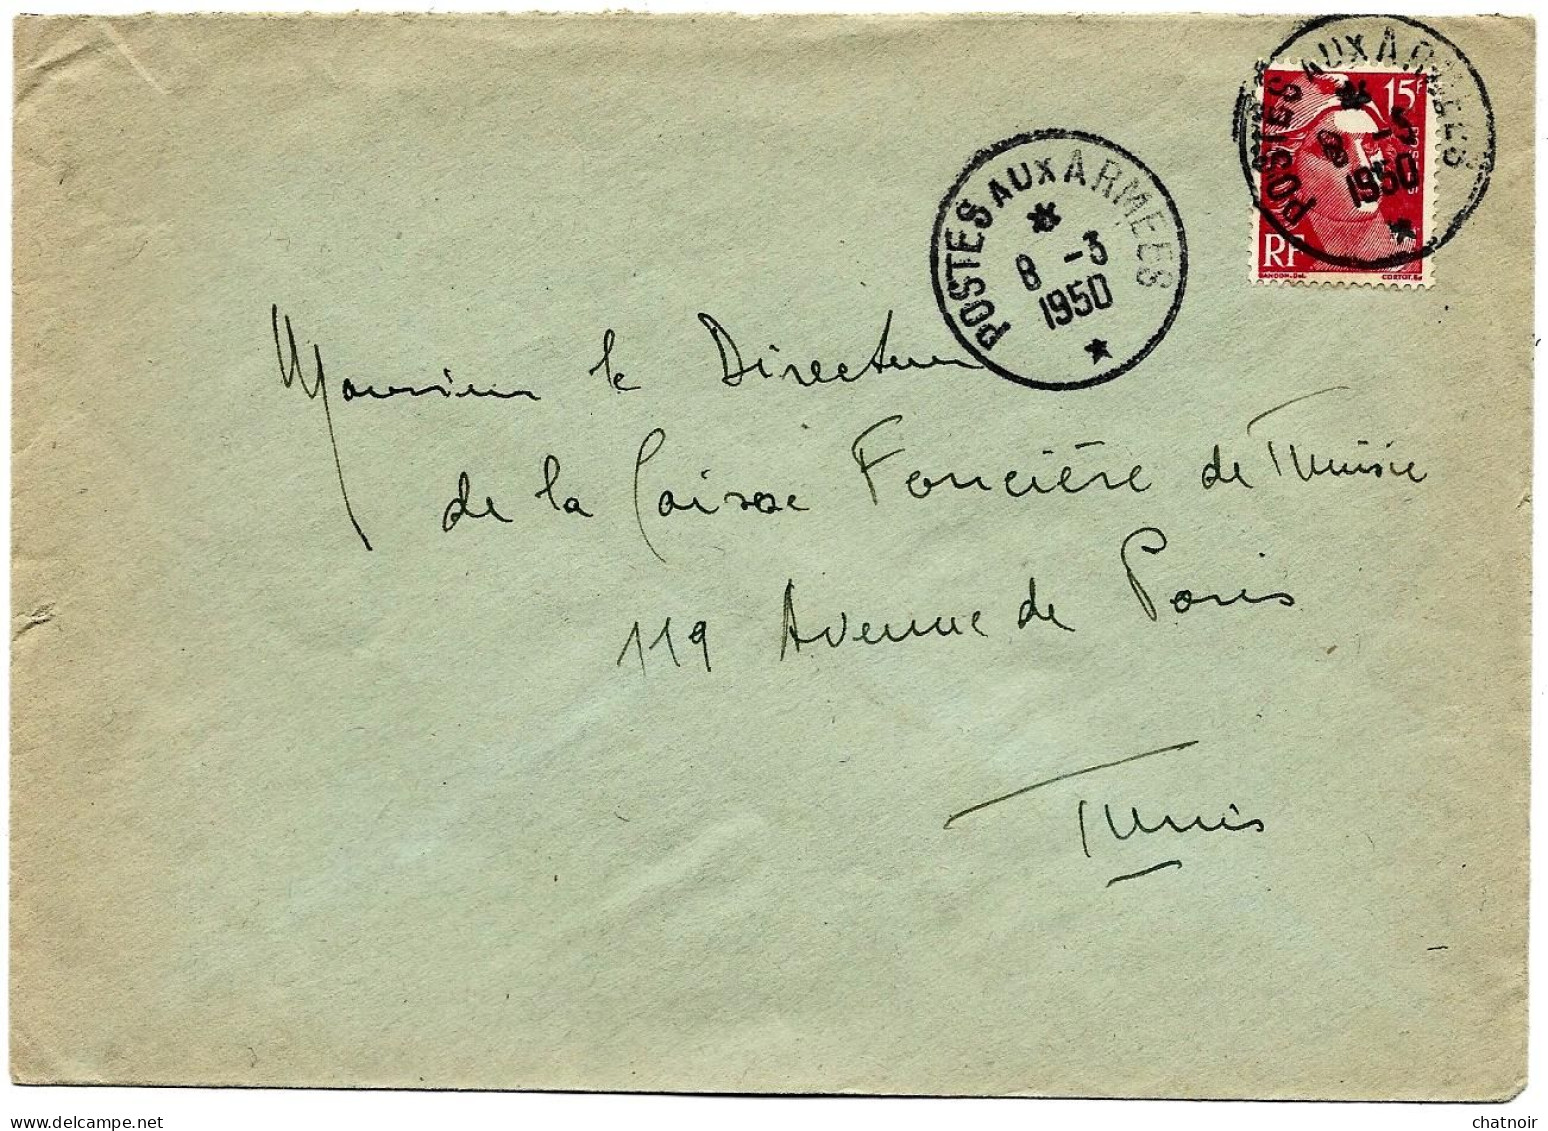 Enveloppe Oblit  POSTES  AUX  ARMEES  Sur 15f GANDON  1950  Pour La Tunisie - Bolli Militari A Partire Dal 1900 (fuori Dal Periodo Di Guerra)